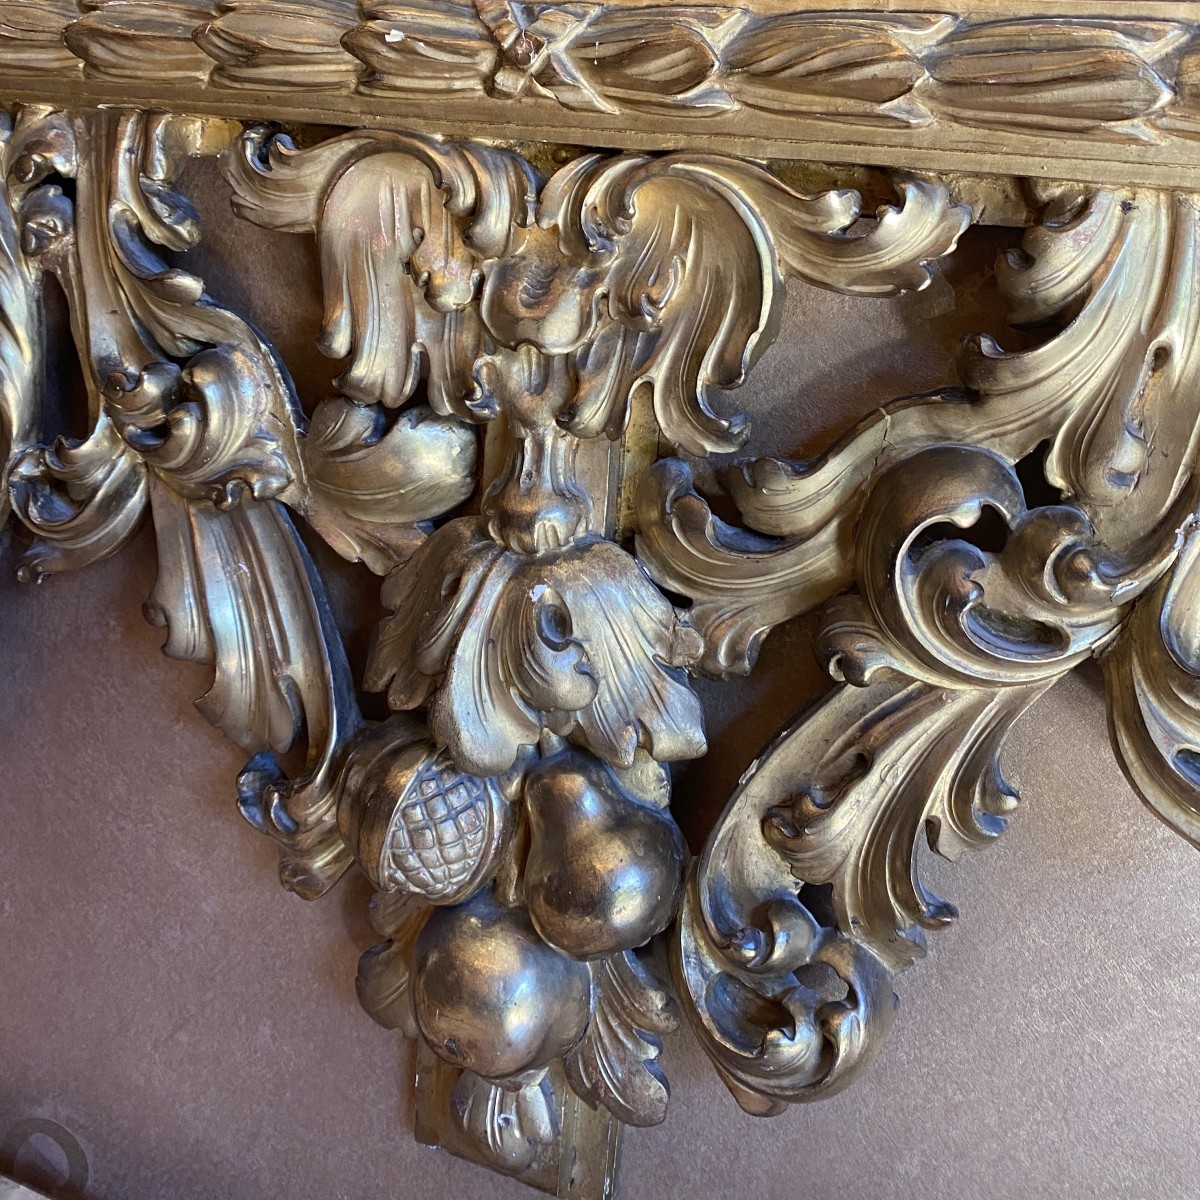 19th C. Italian Carved Gilt Wood Mirror